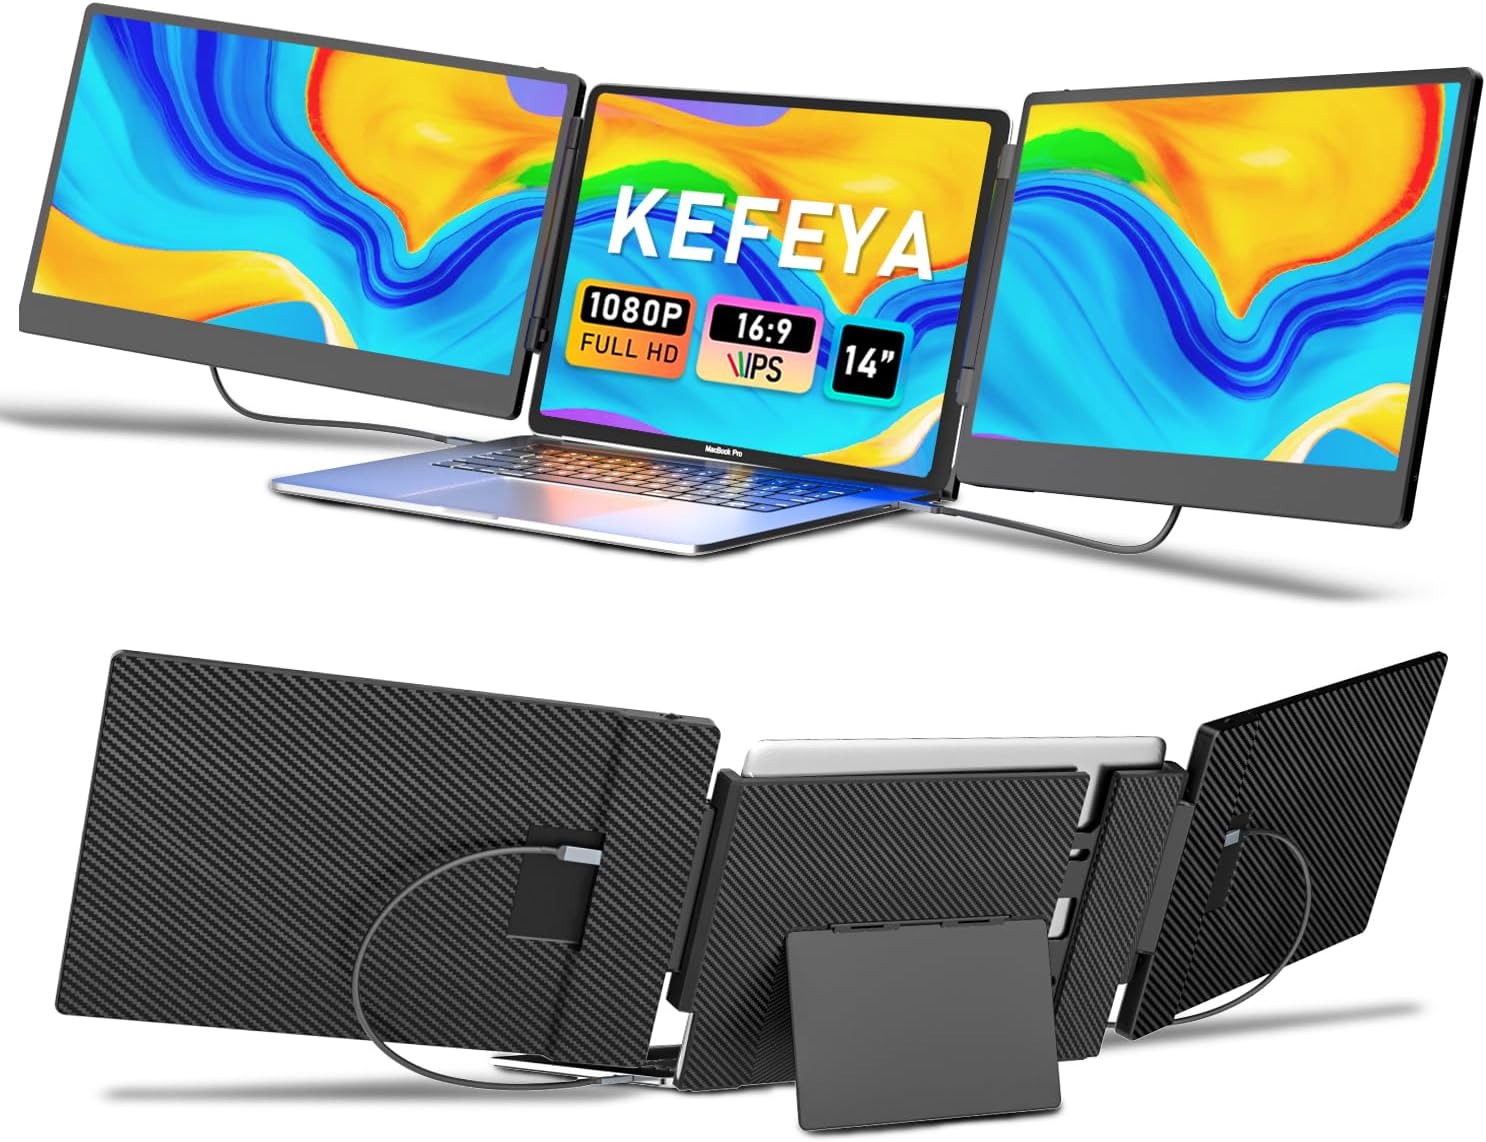 KEFEYA Laptop Screen Extender 14" FHD 1080P IPS Triple Portable Monitor